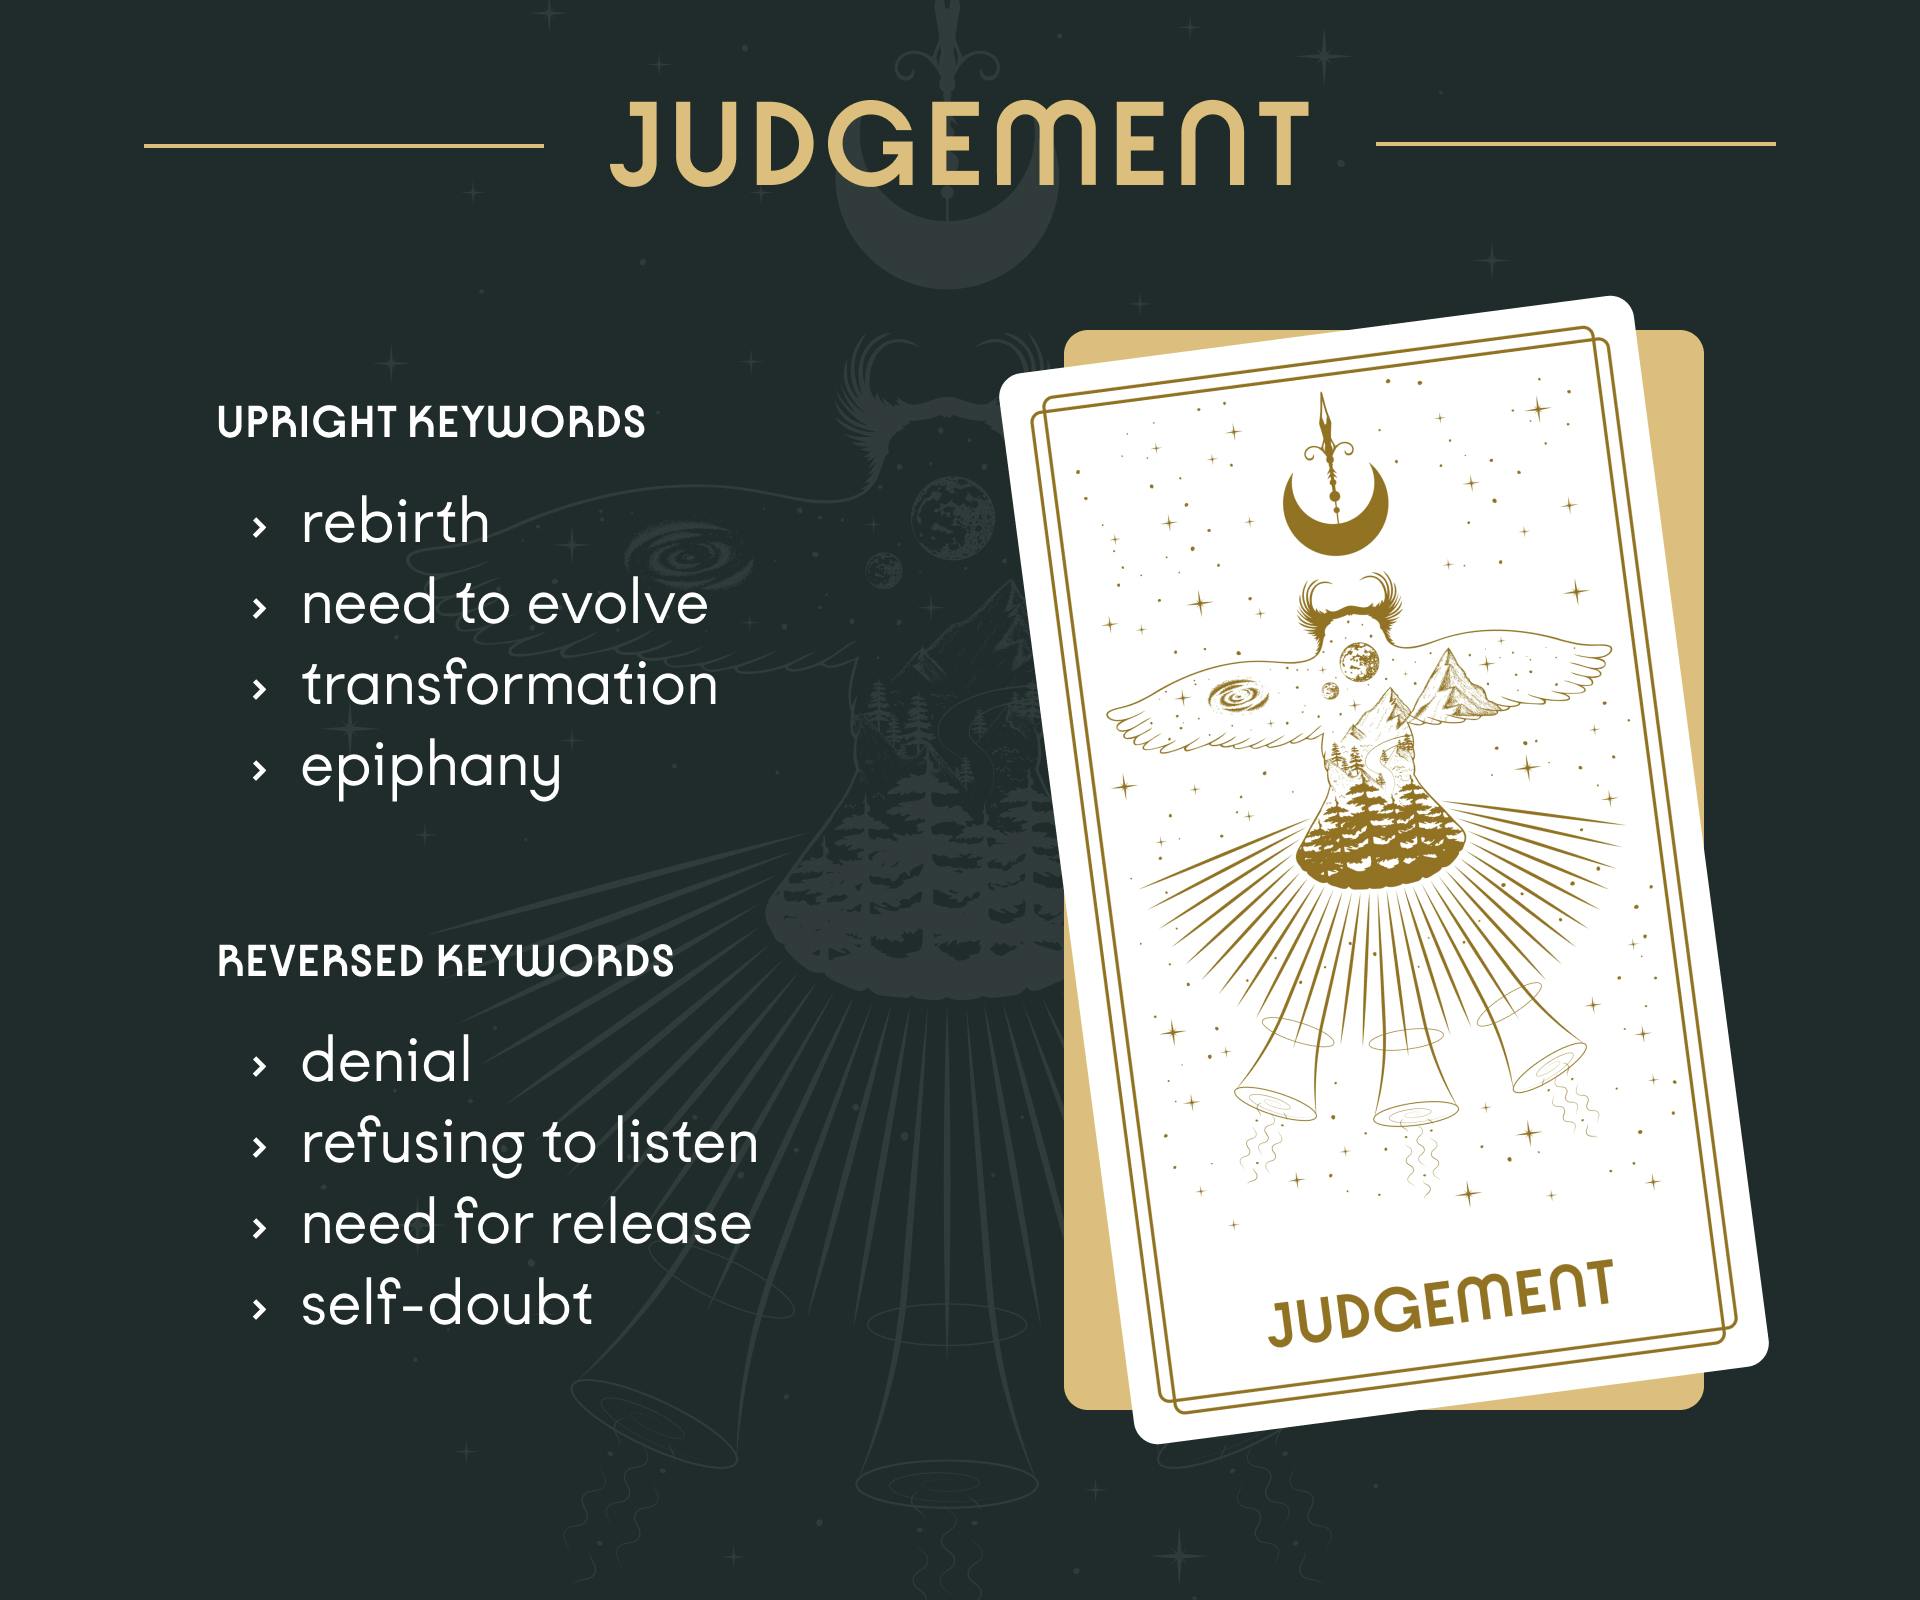 Judgement Tarot Card Upright and Reversed Keywords